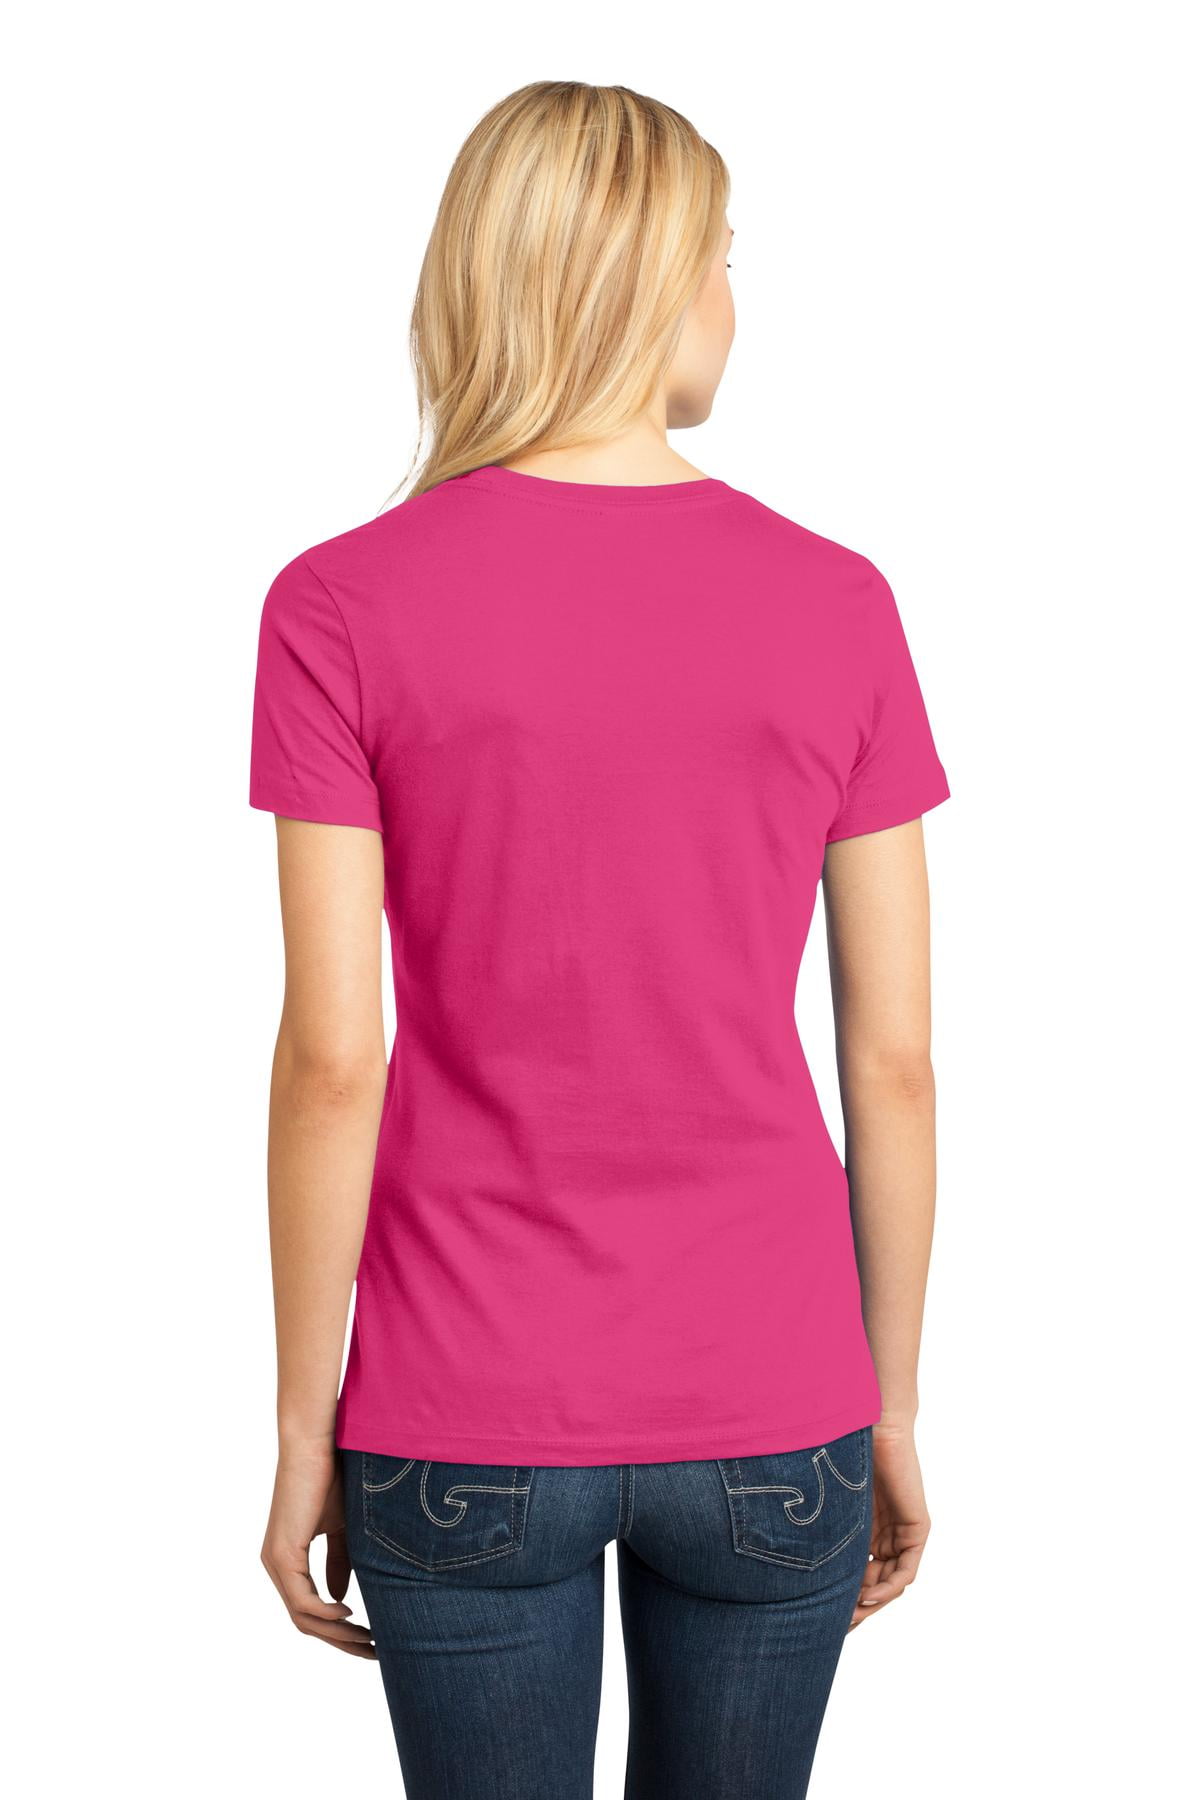 District® Soft-Touch Women's T-shirt